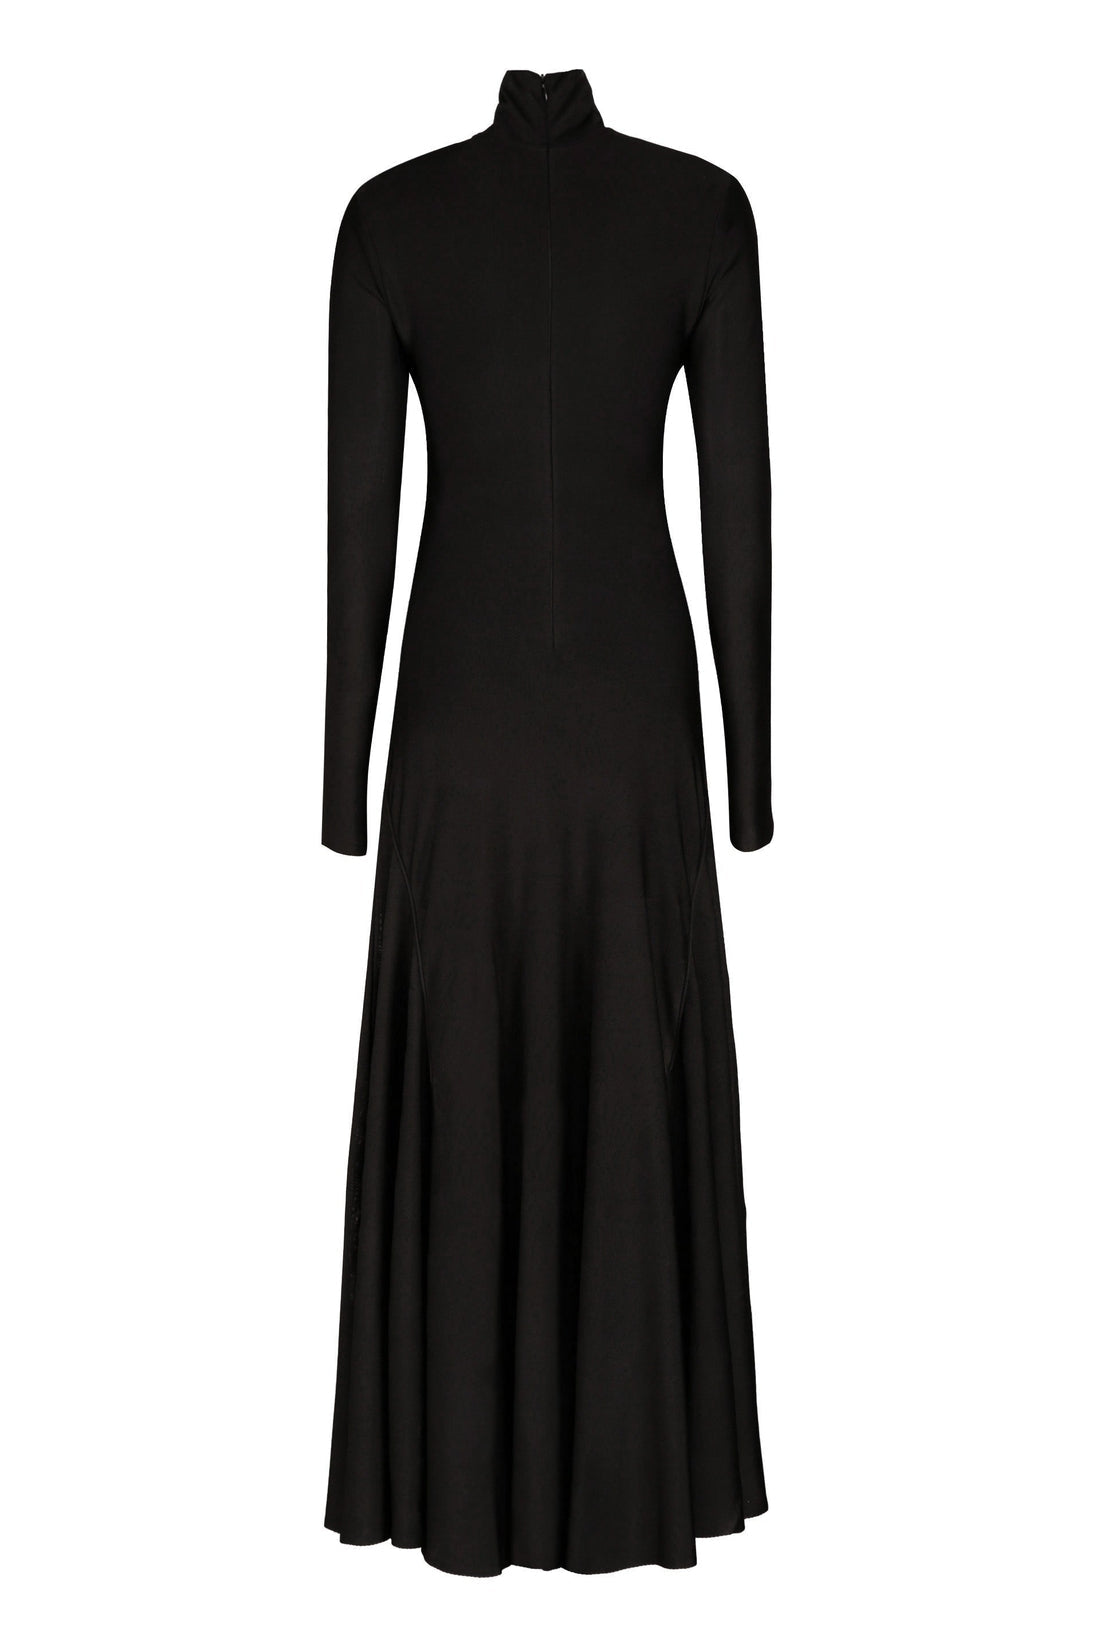 Bottega Veneta-OUTLET-SALE-Jersey dress-ARCHIVIST